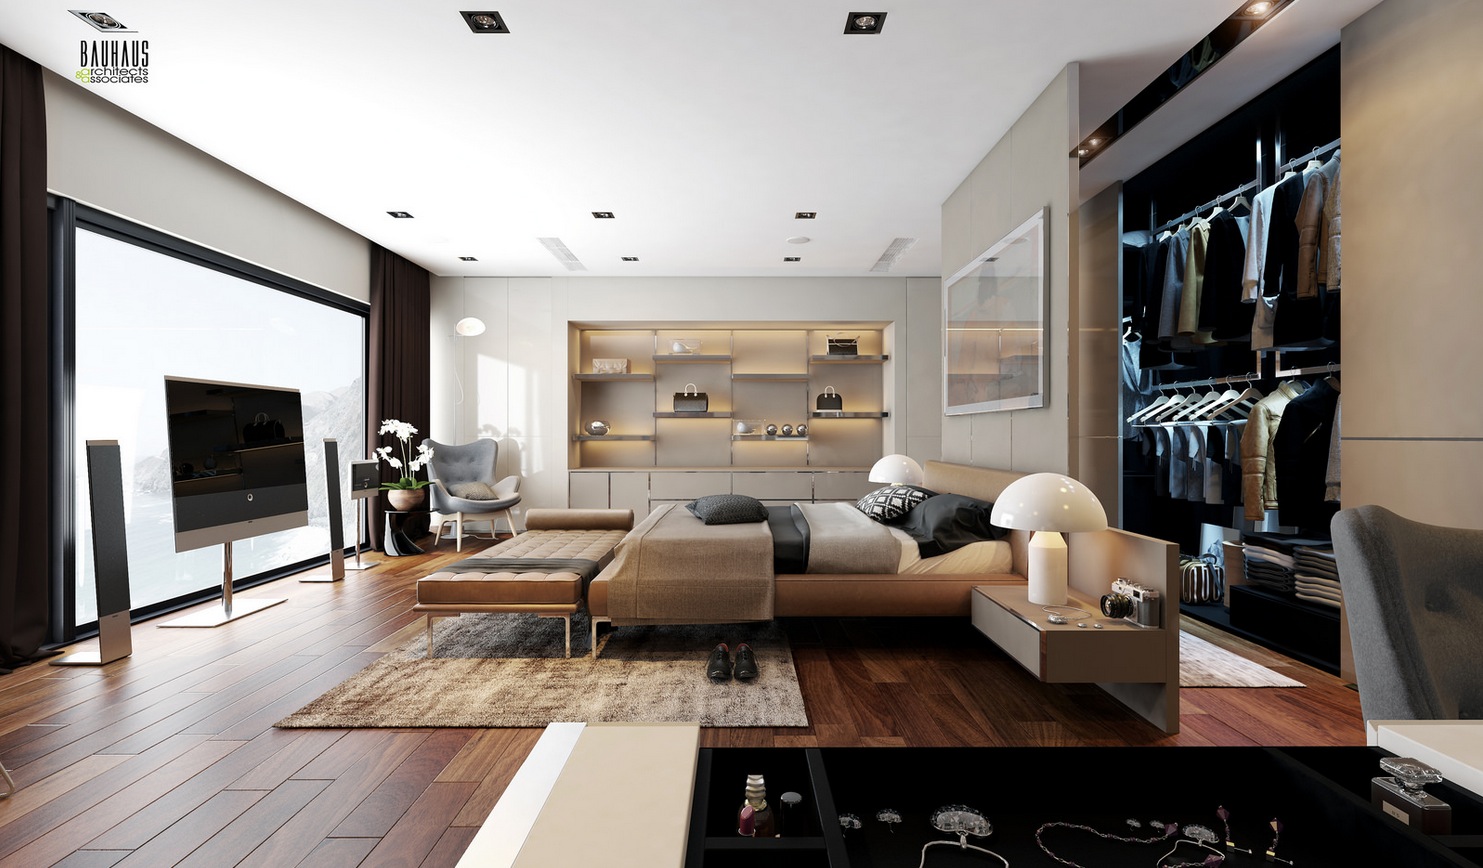 Inspirational Interior Ideas From Bauhaus Architects \u0026 Associates